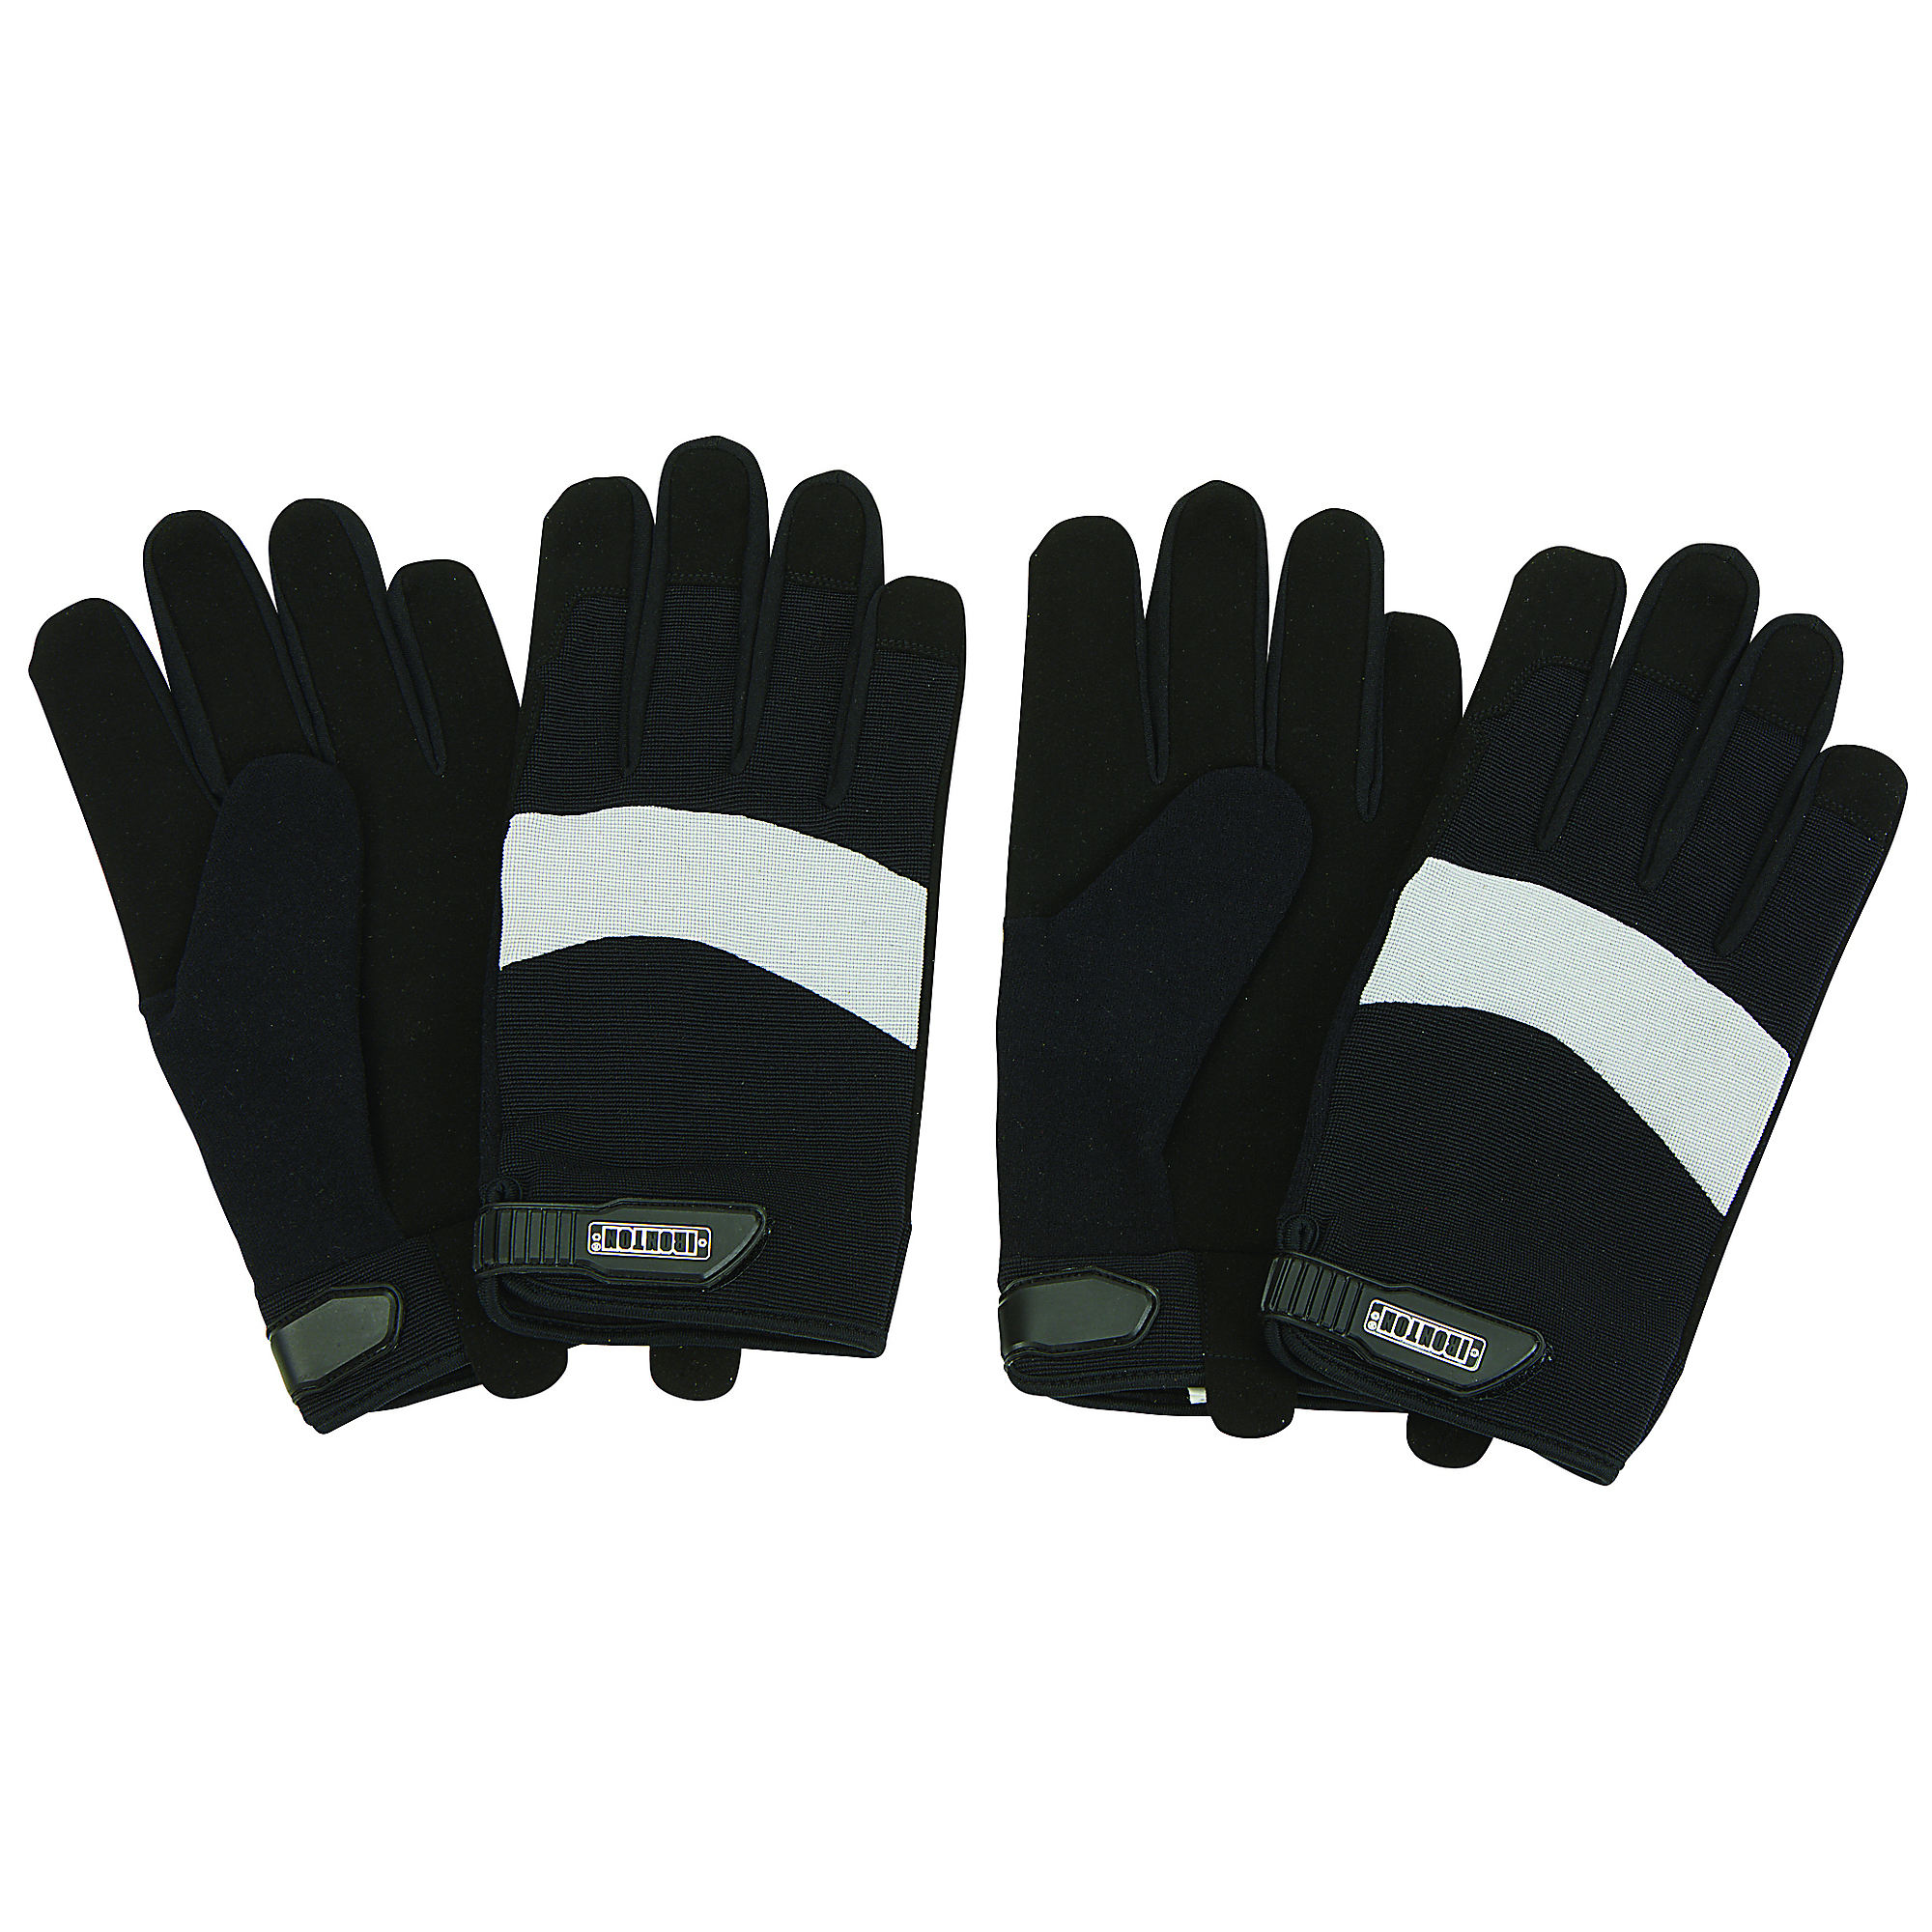 Ironton Men's High-Dexterity General-Purpose Work Gloves, 2 Pairs,  Black/Gray, 2XL